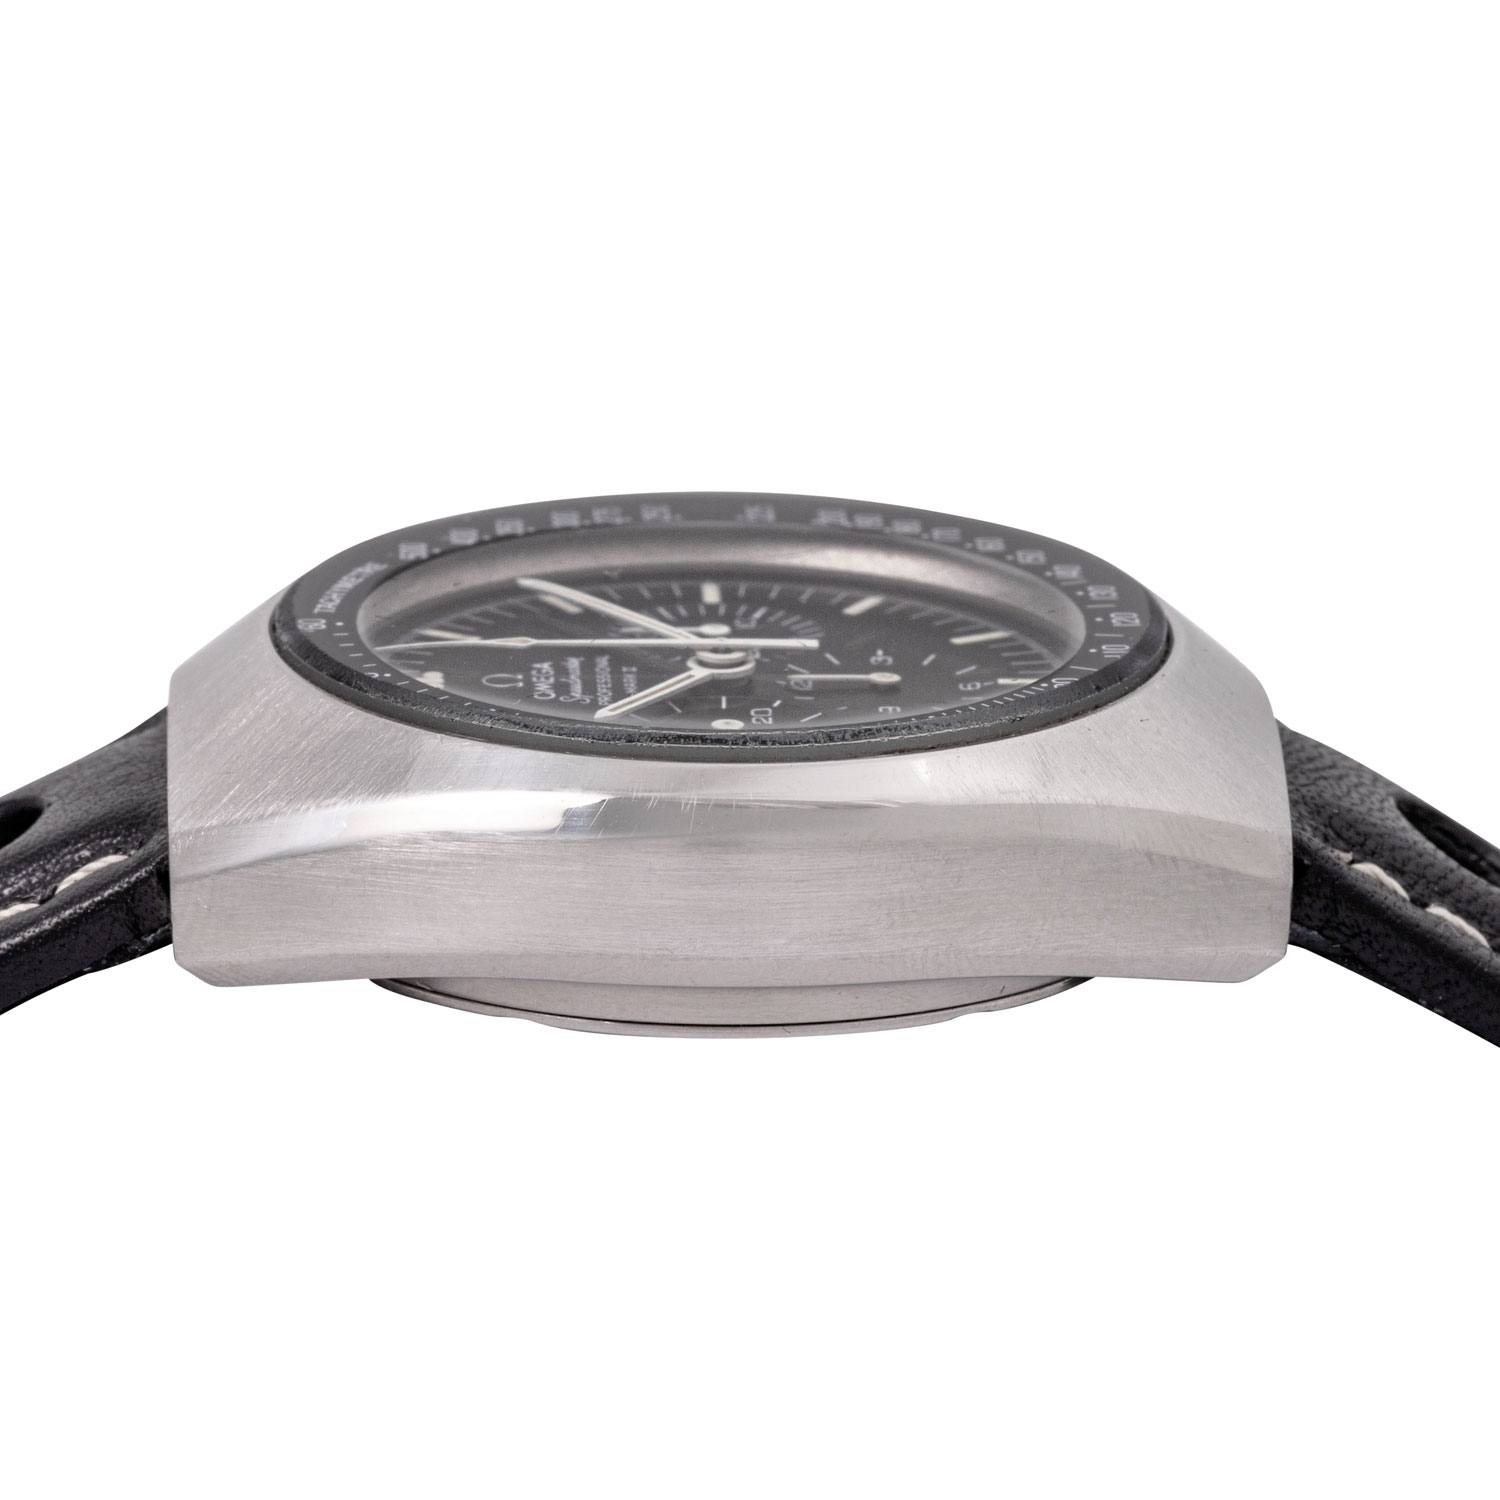 OMEGA Speedmaster Professional Mark II Herren Chronograph, Ref. 145.014. - Bild 4 aus 7